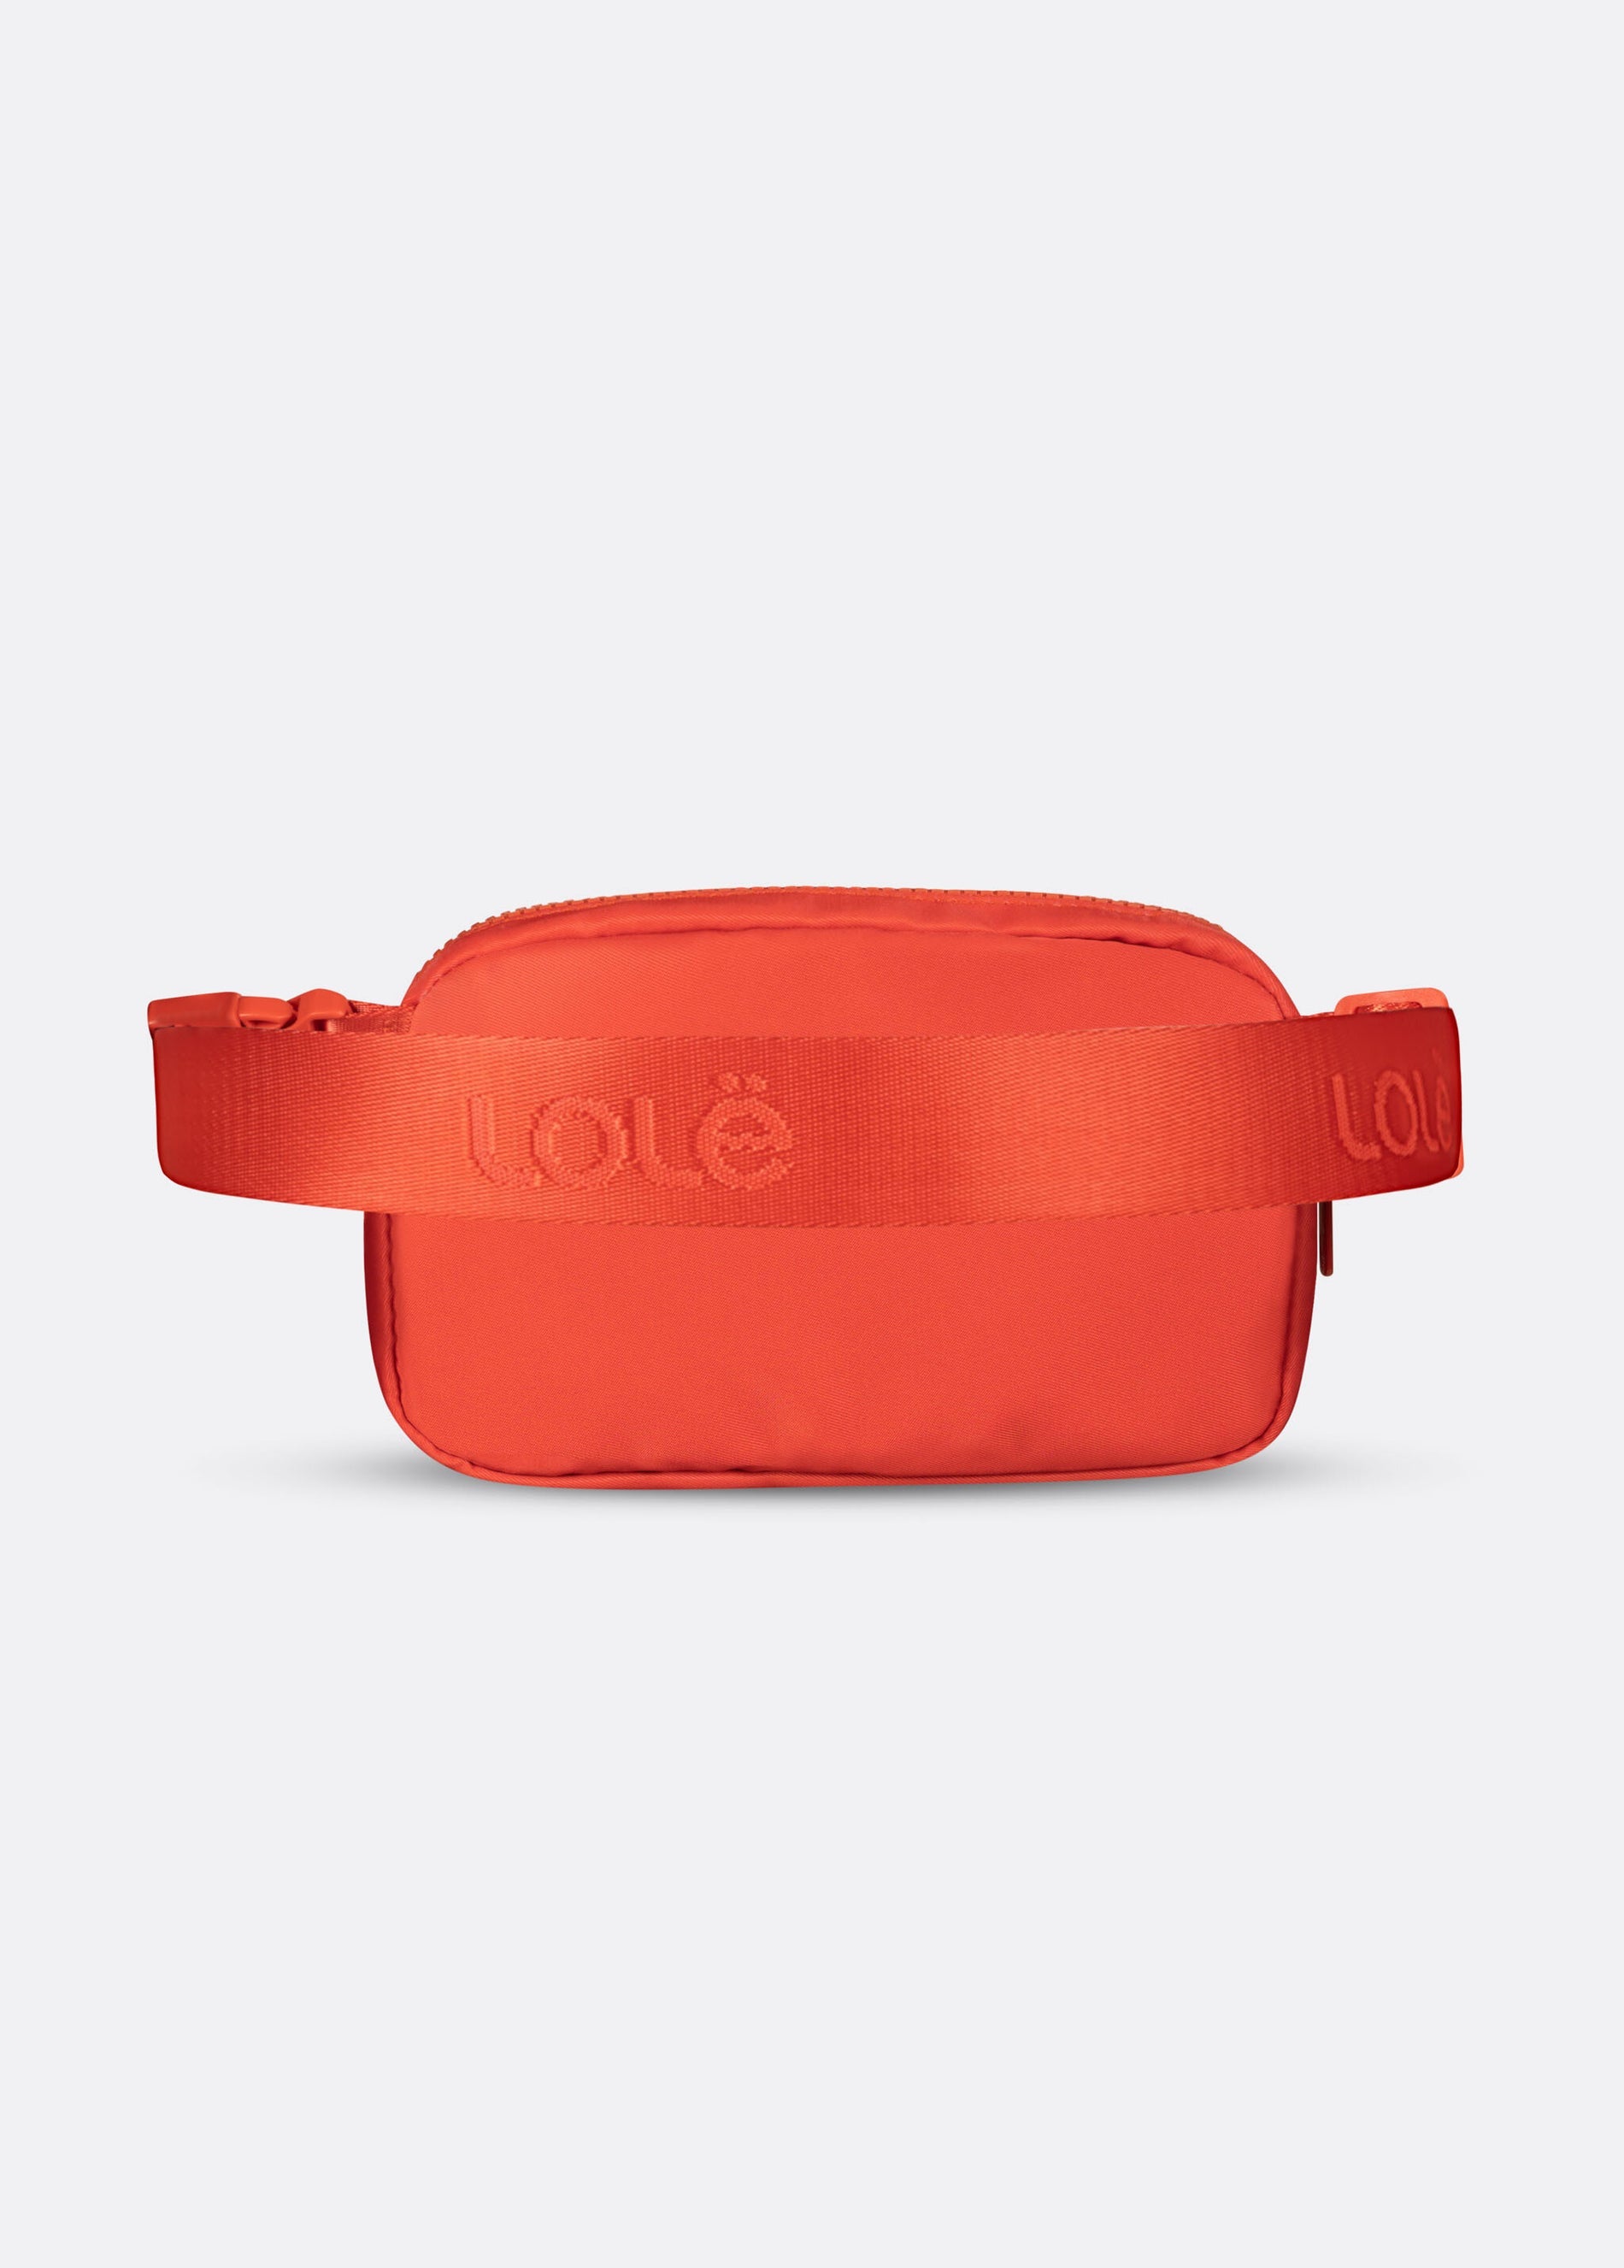 Lole - Jamie Belt Bag